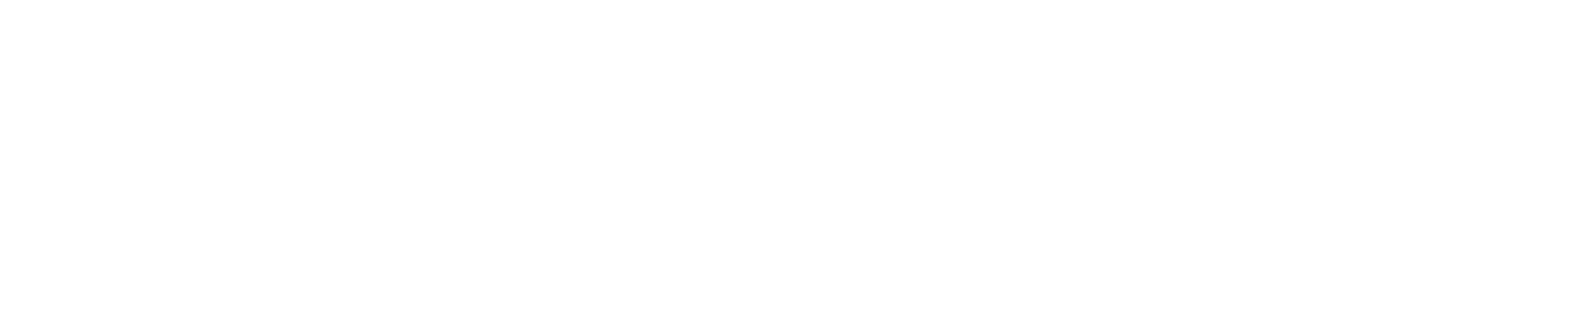 Telecom Argentina
 Logo groß für dunkle Hintergründe (transparentes PNG)